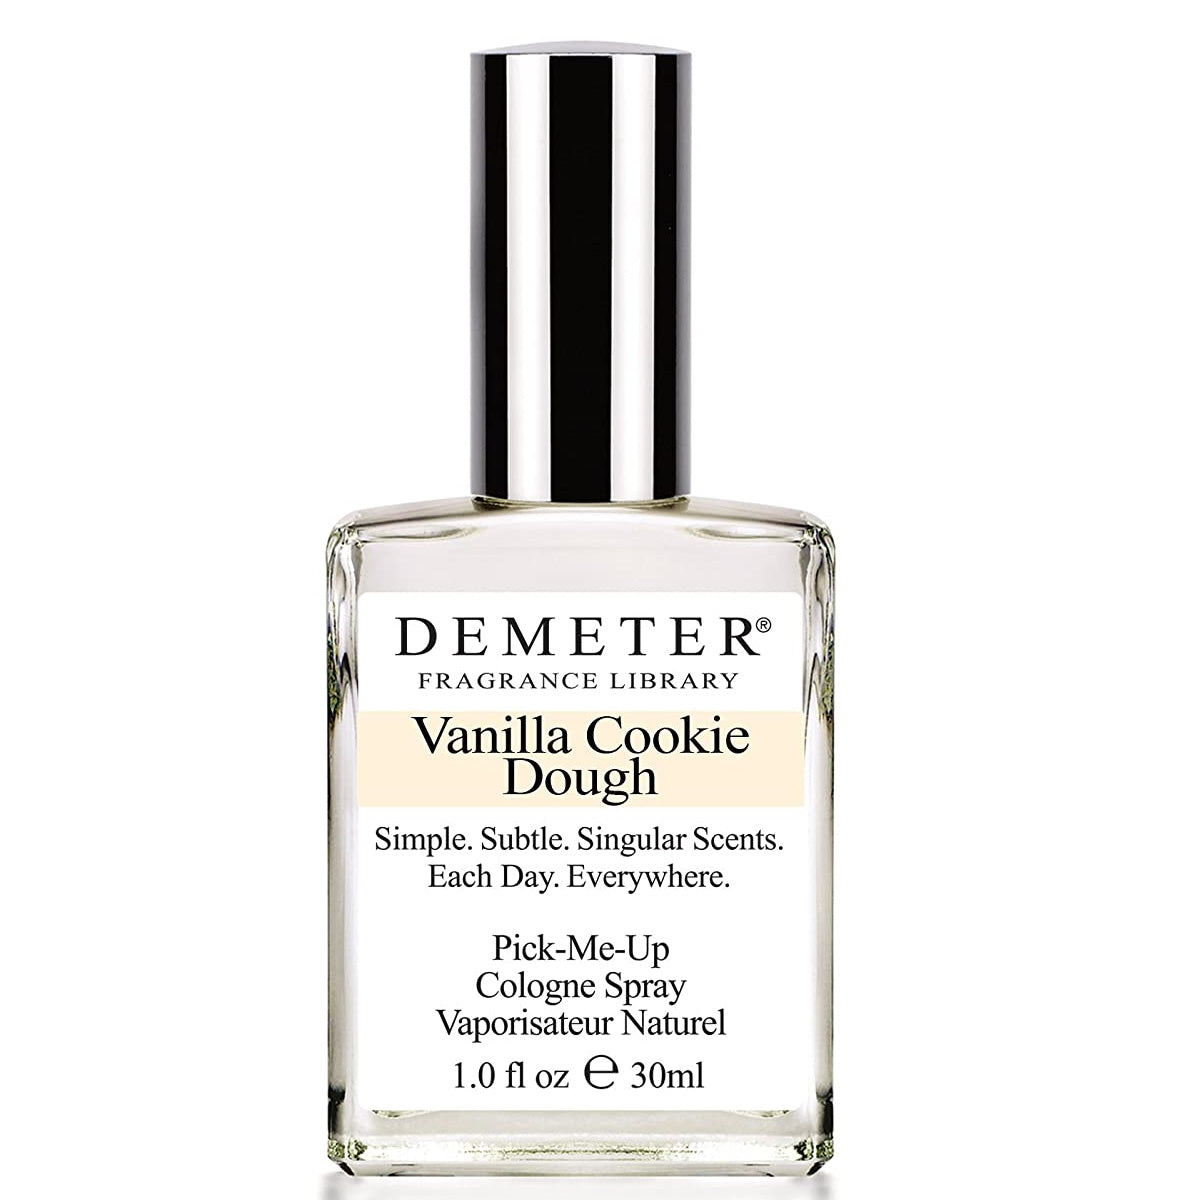 vanilla cookie dough : Demeter Cologne Spray